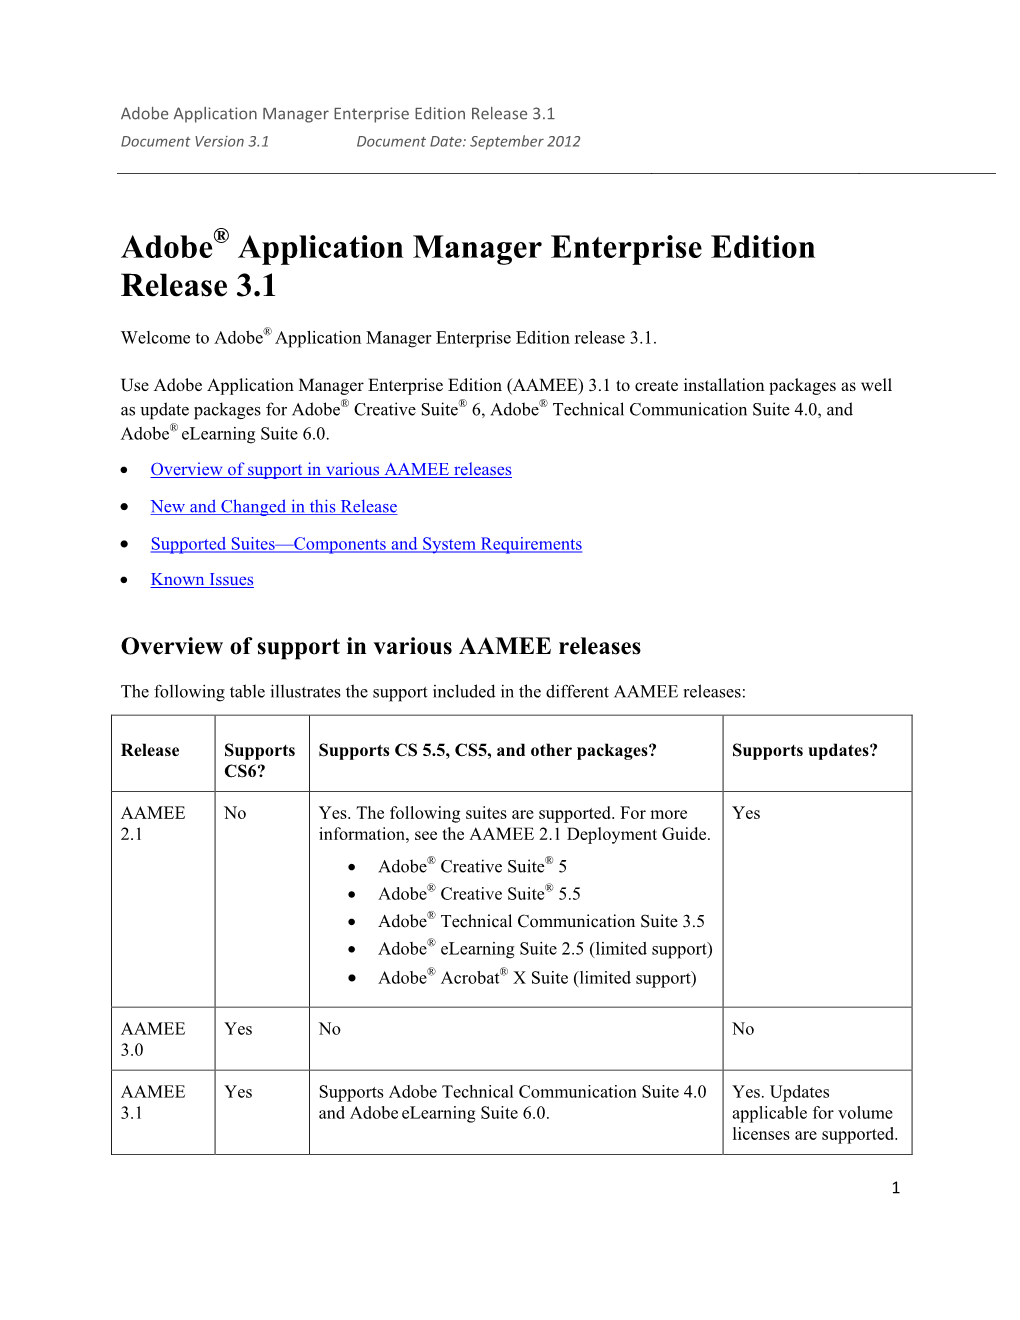 Adobe Application Manager Enterprise Edition Readme